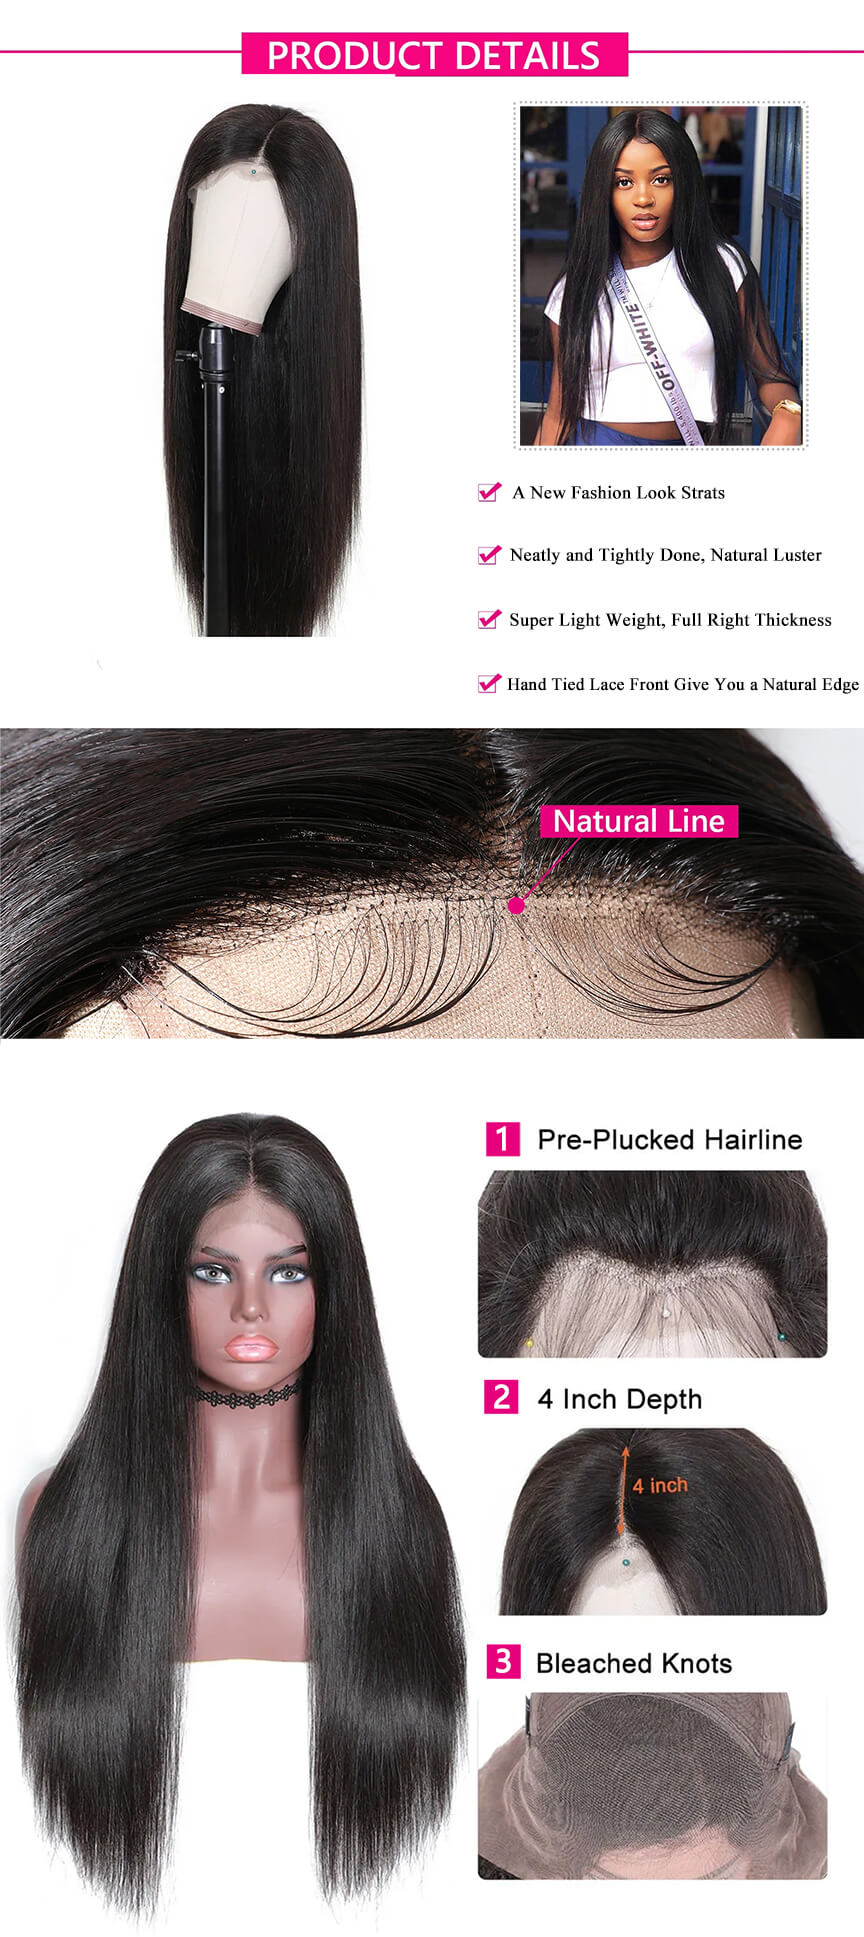 Rosebony Straight Hair Lace Front Wig Human Hair Detail Description